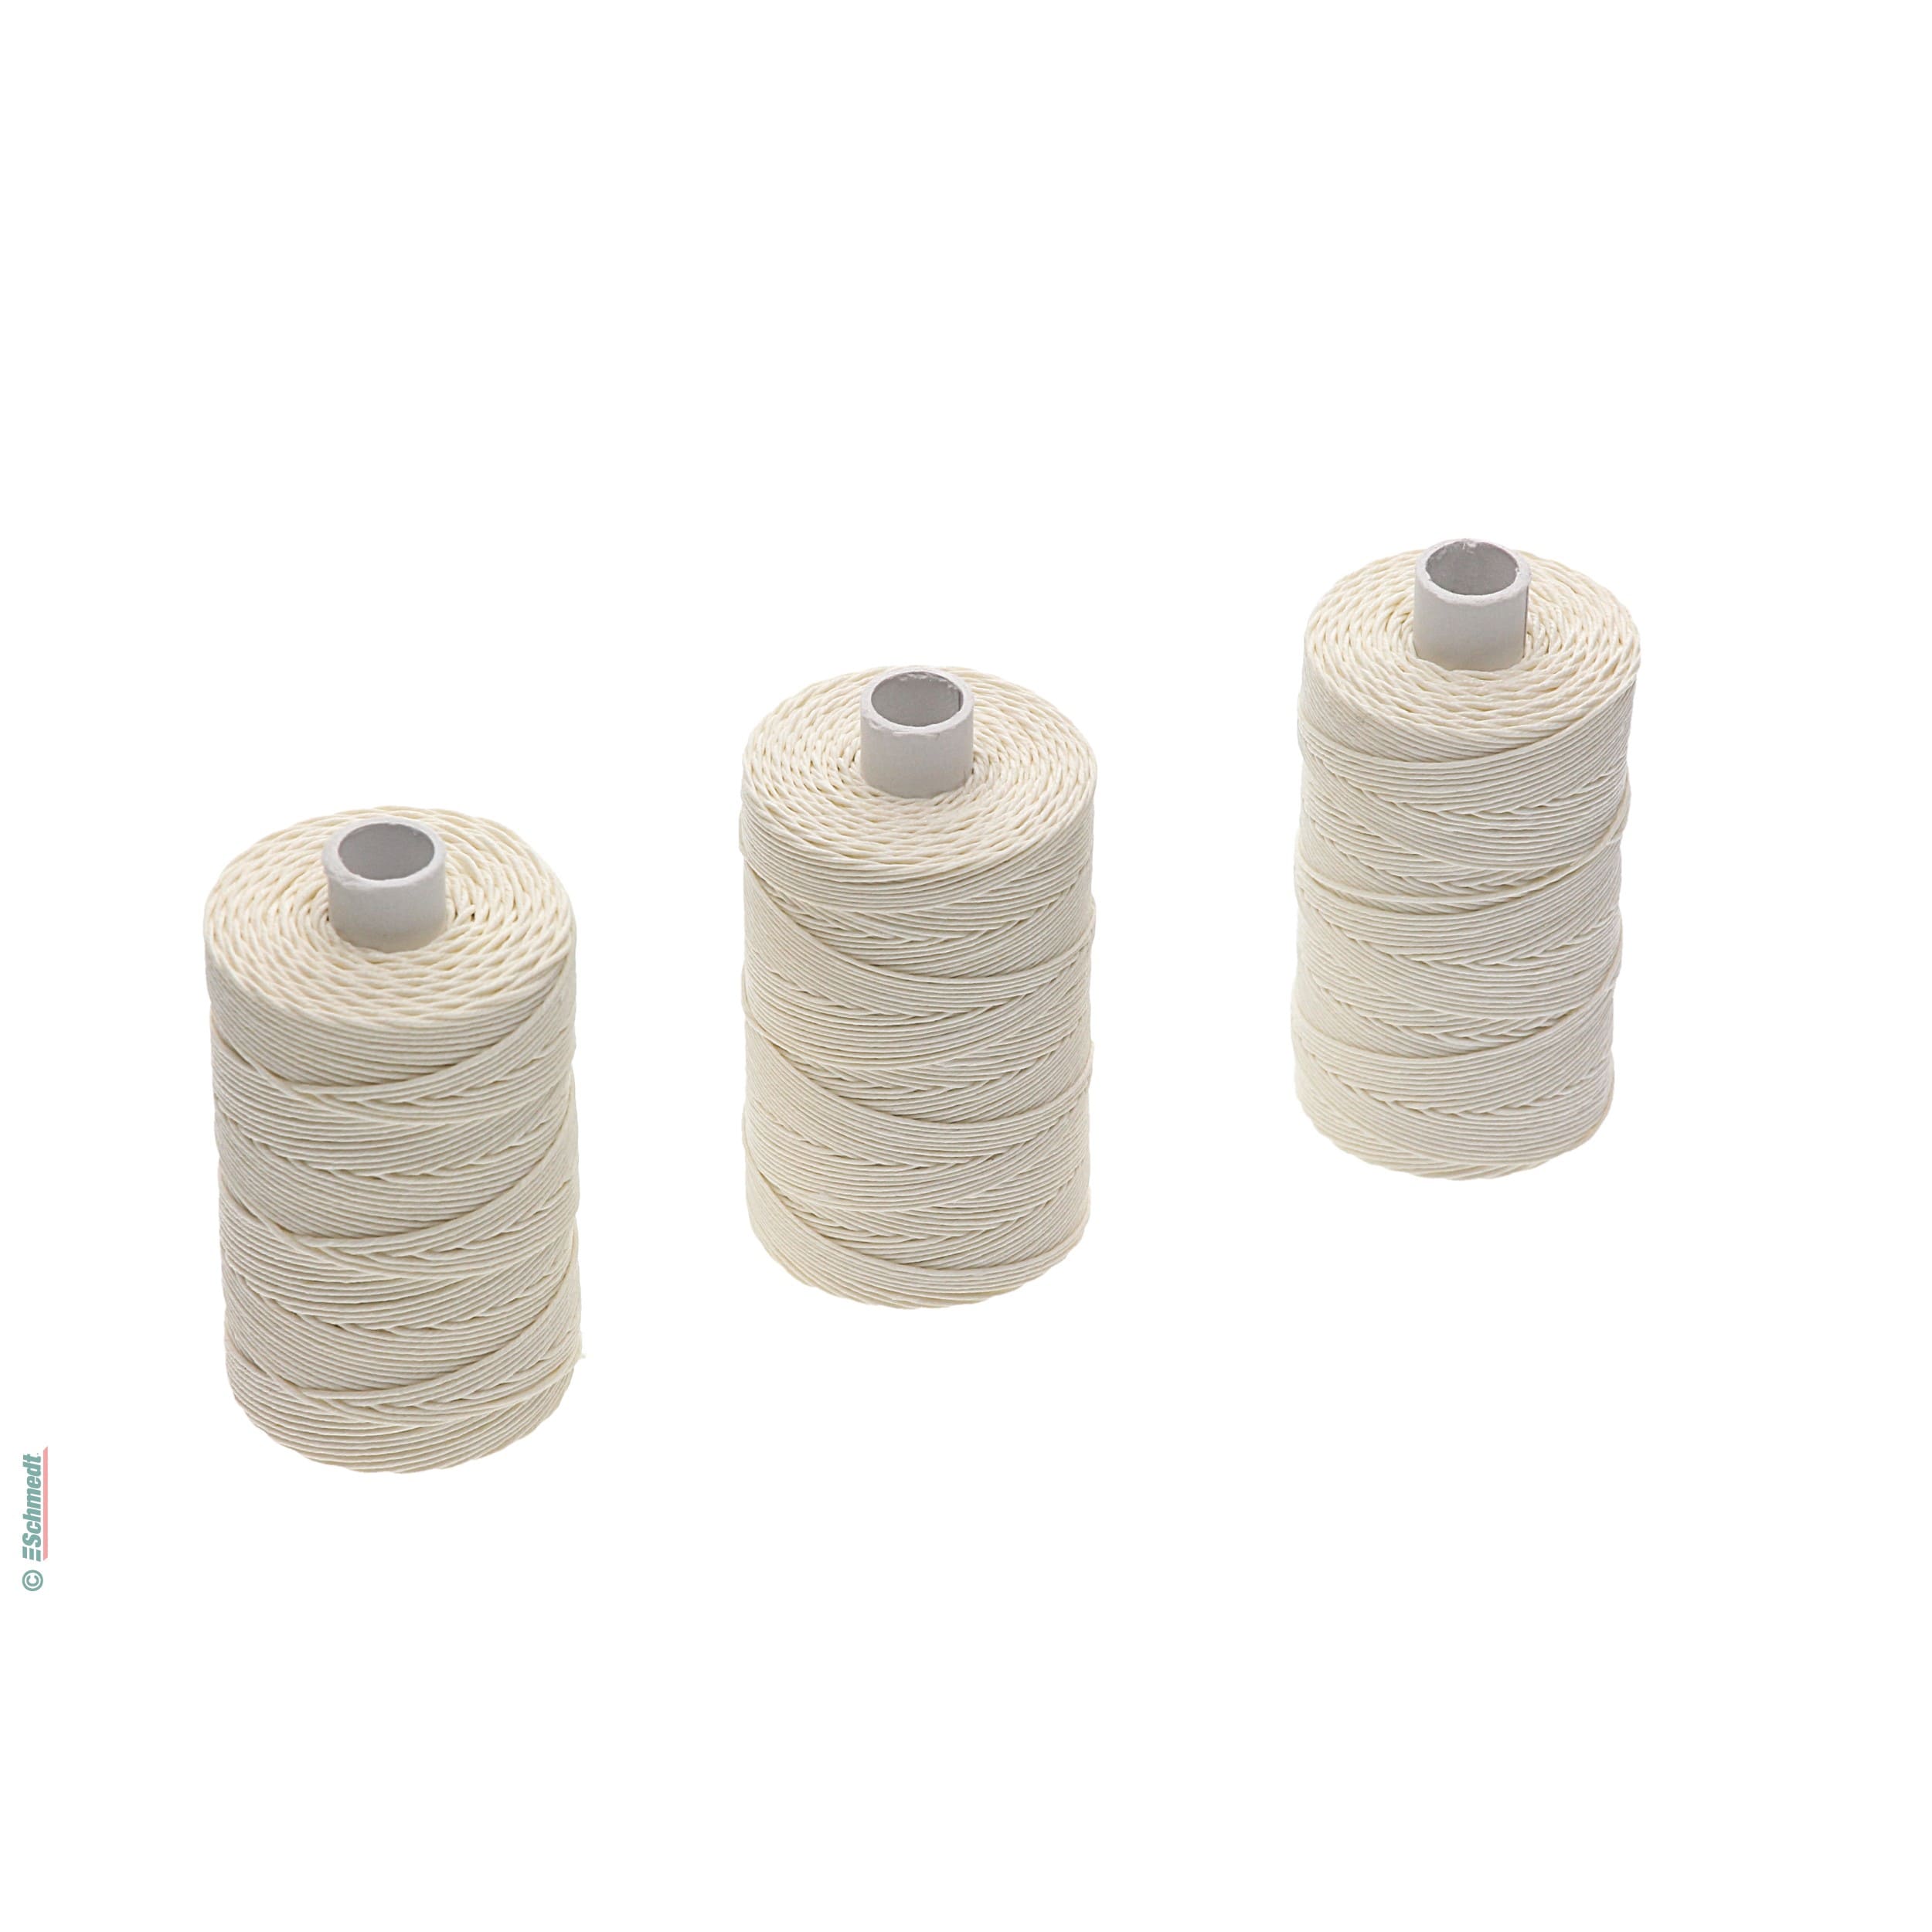 Hilo de lino para coser a mano | blanco natural- - bobina cruzada de 50 g - para el cosido con hilo manual... - imagen-1